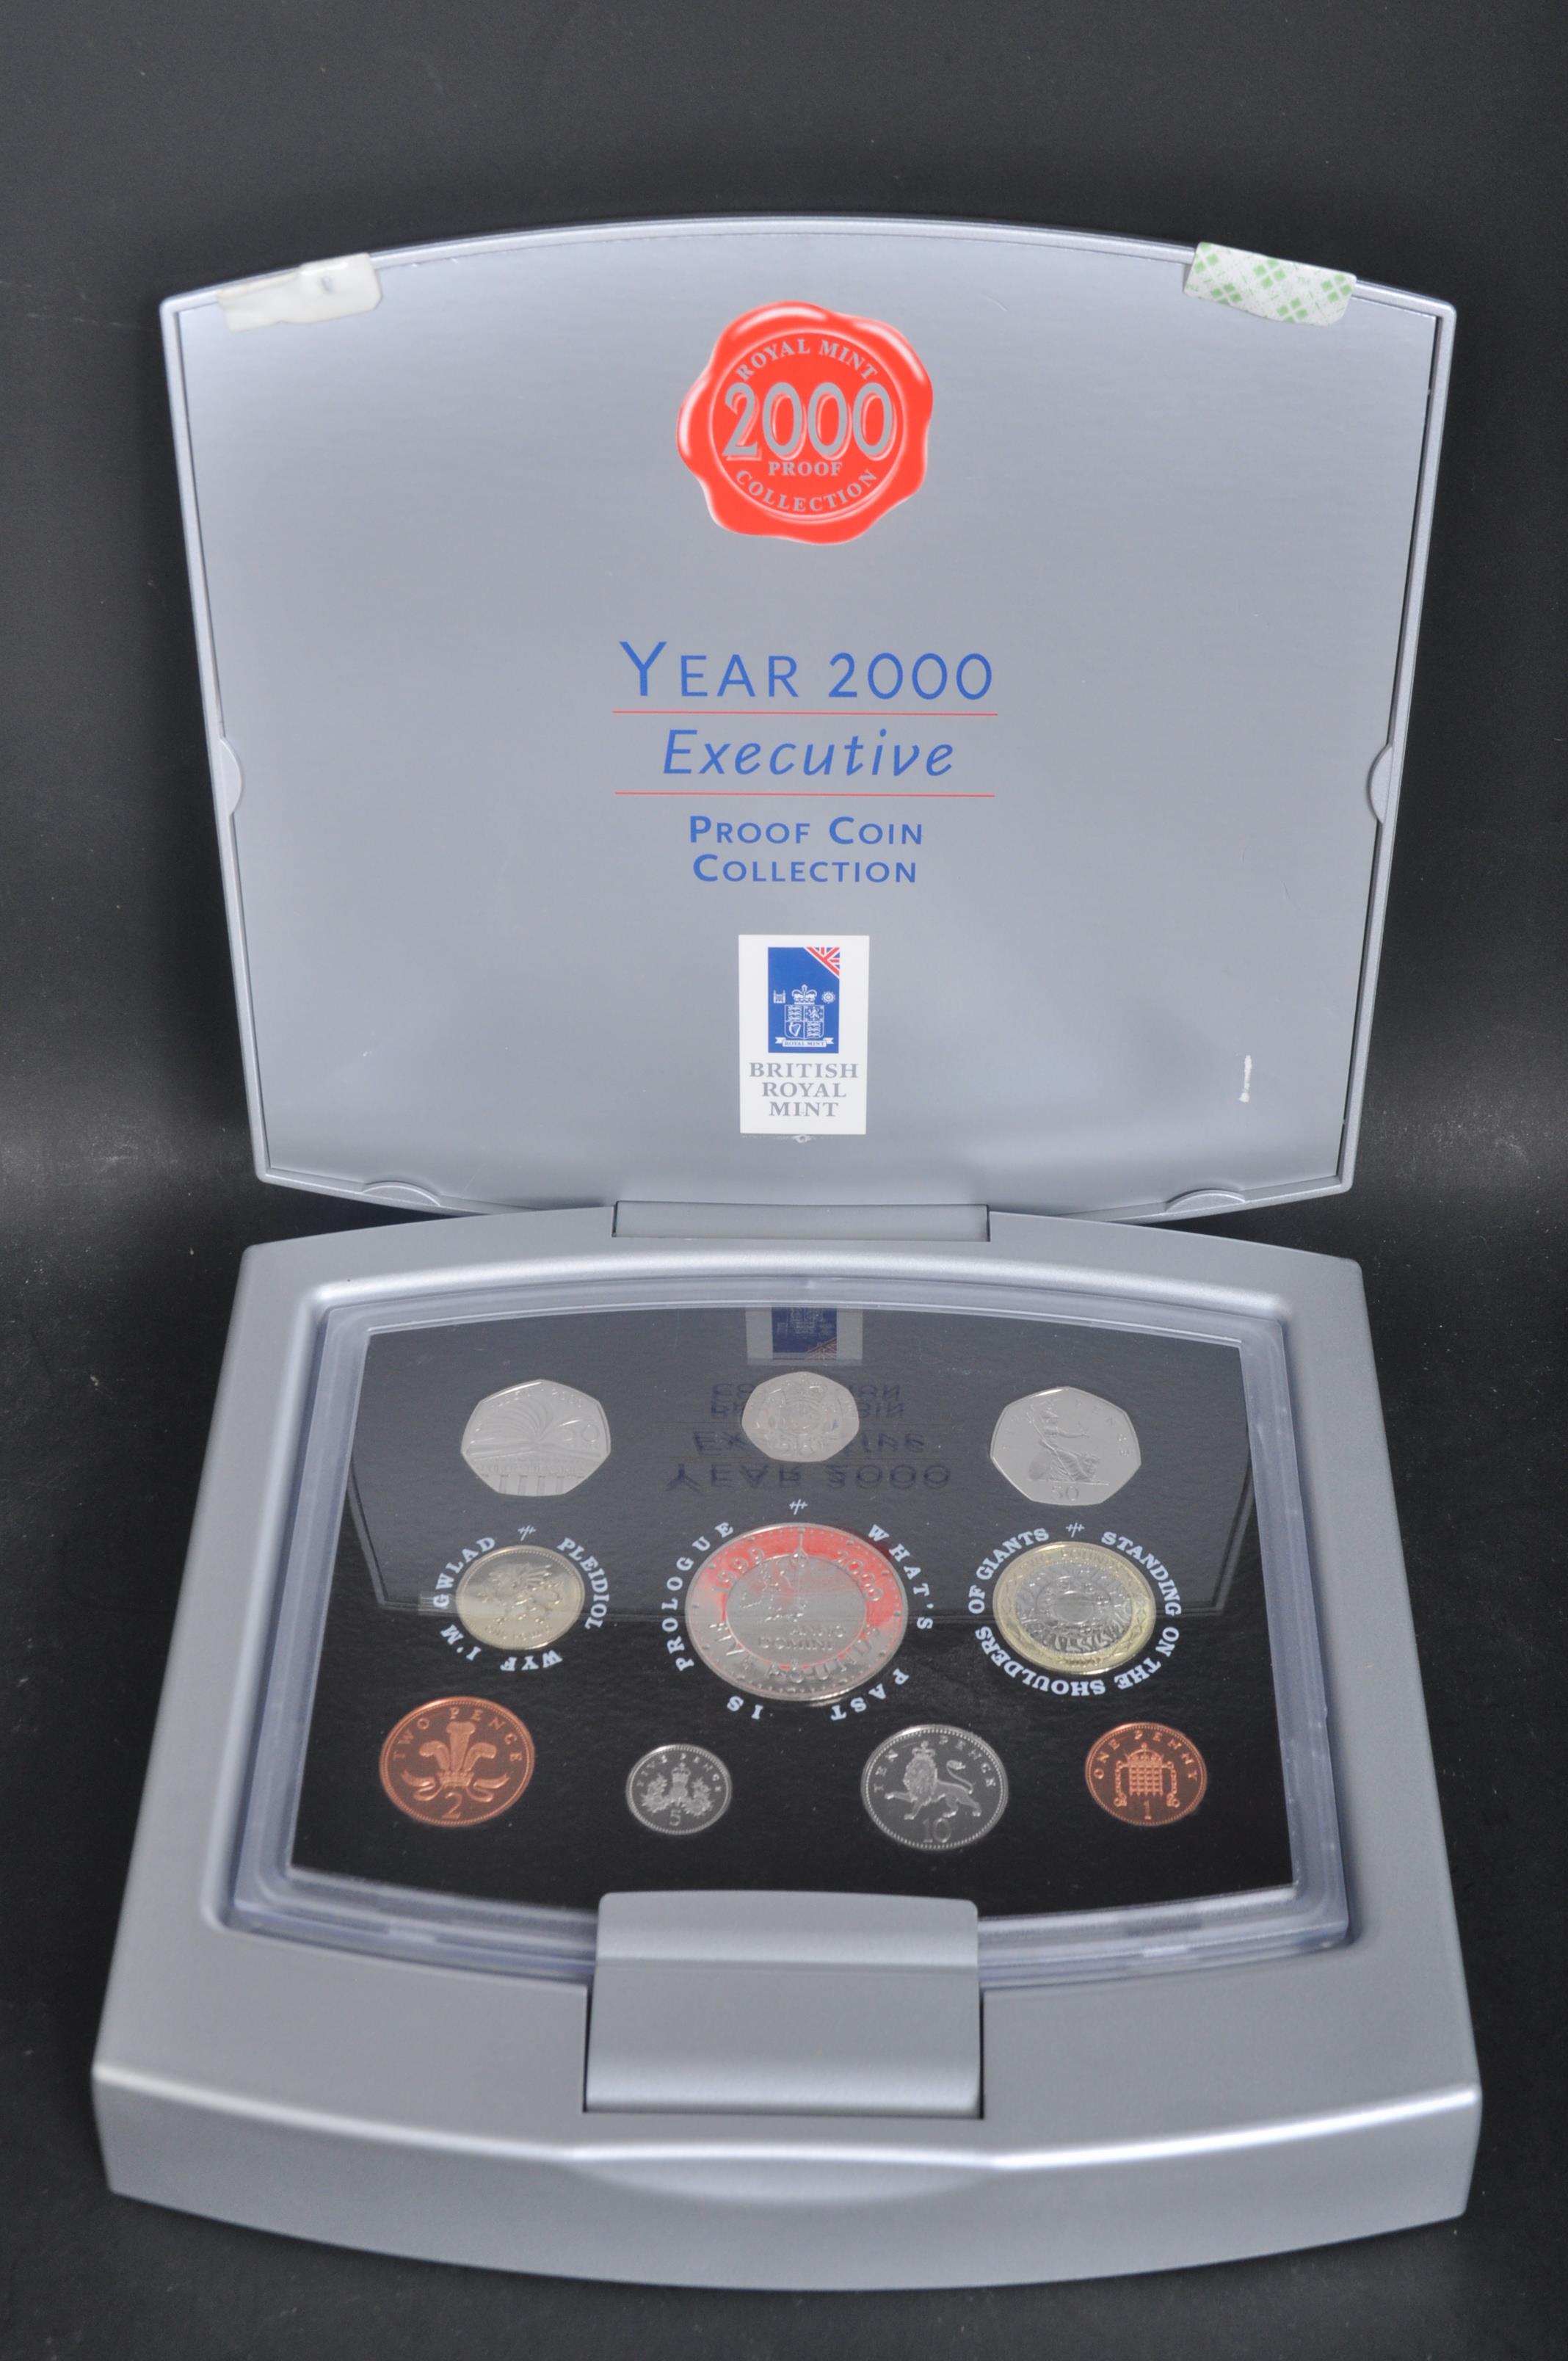 ROYAL MINT 2000 EXECUTIVE PROOF COIN SET